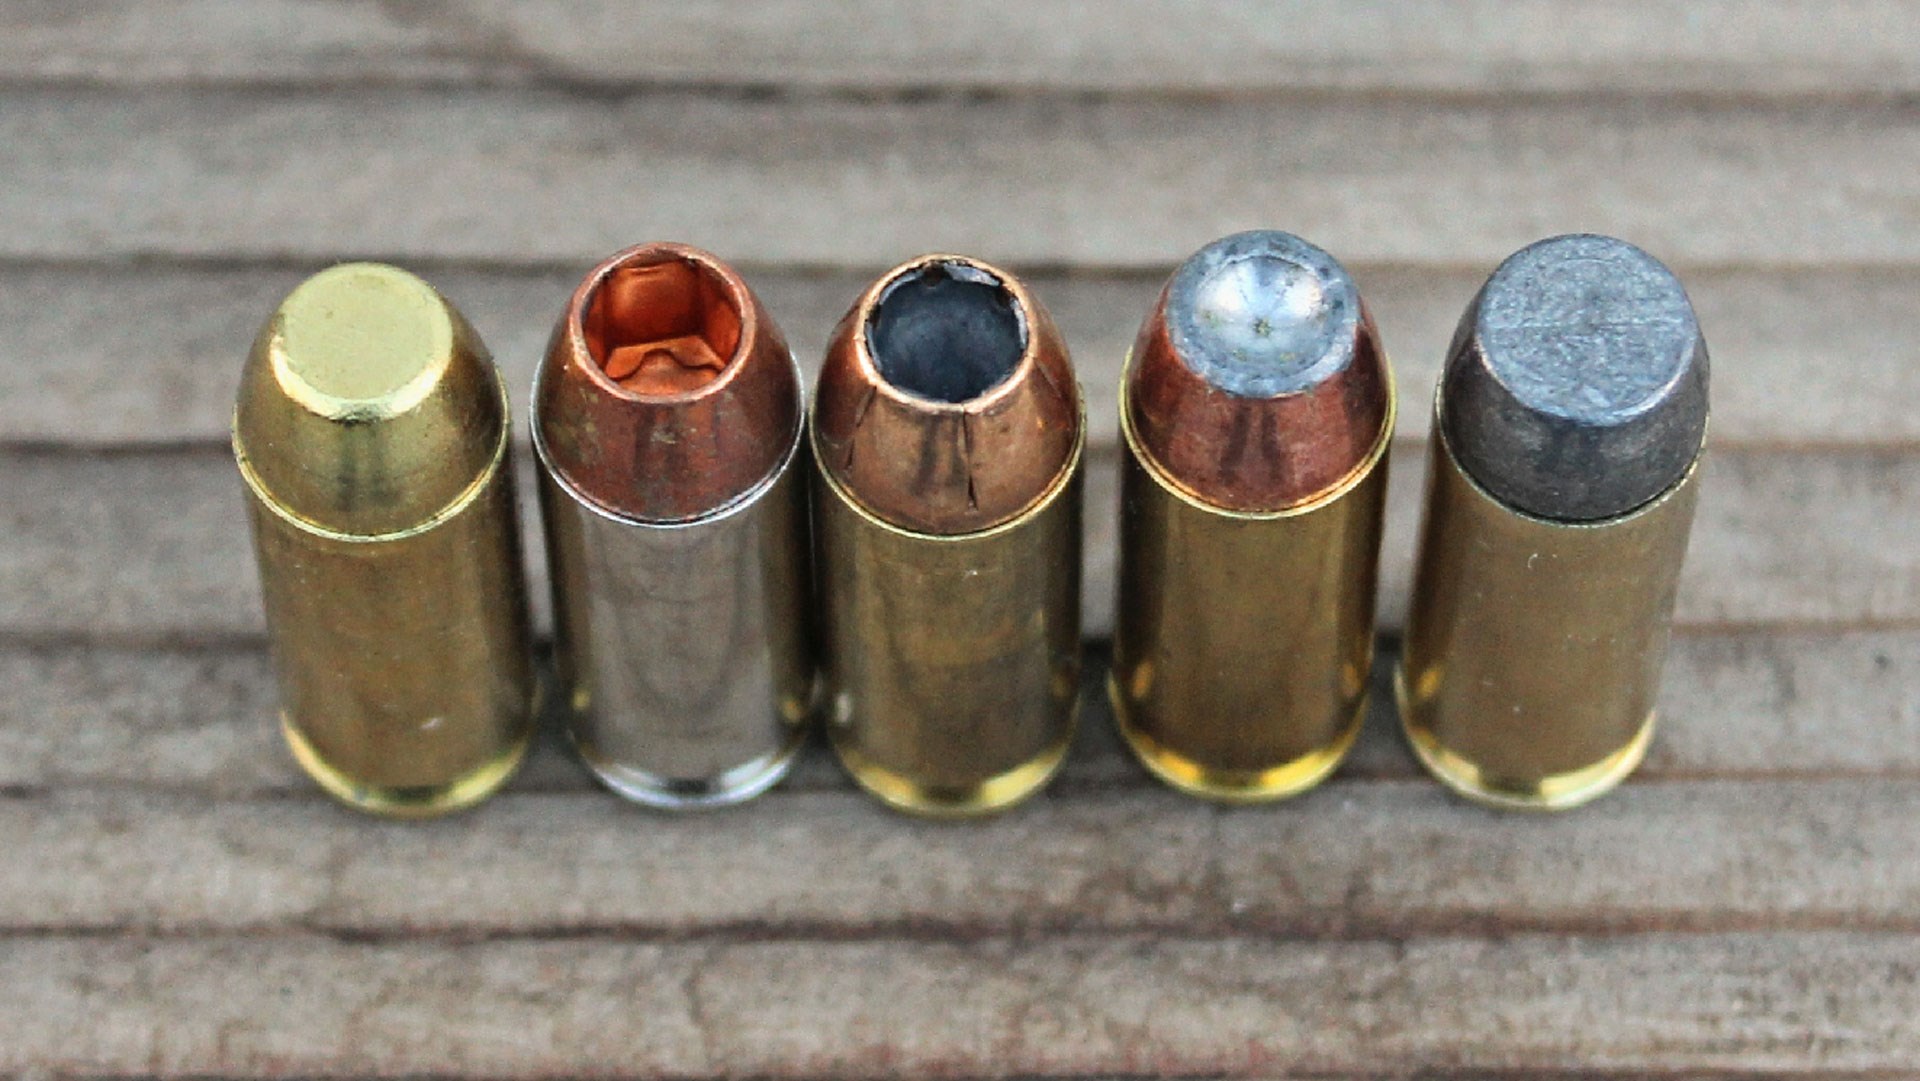 10mm Ammunition roundup